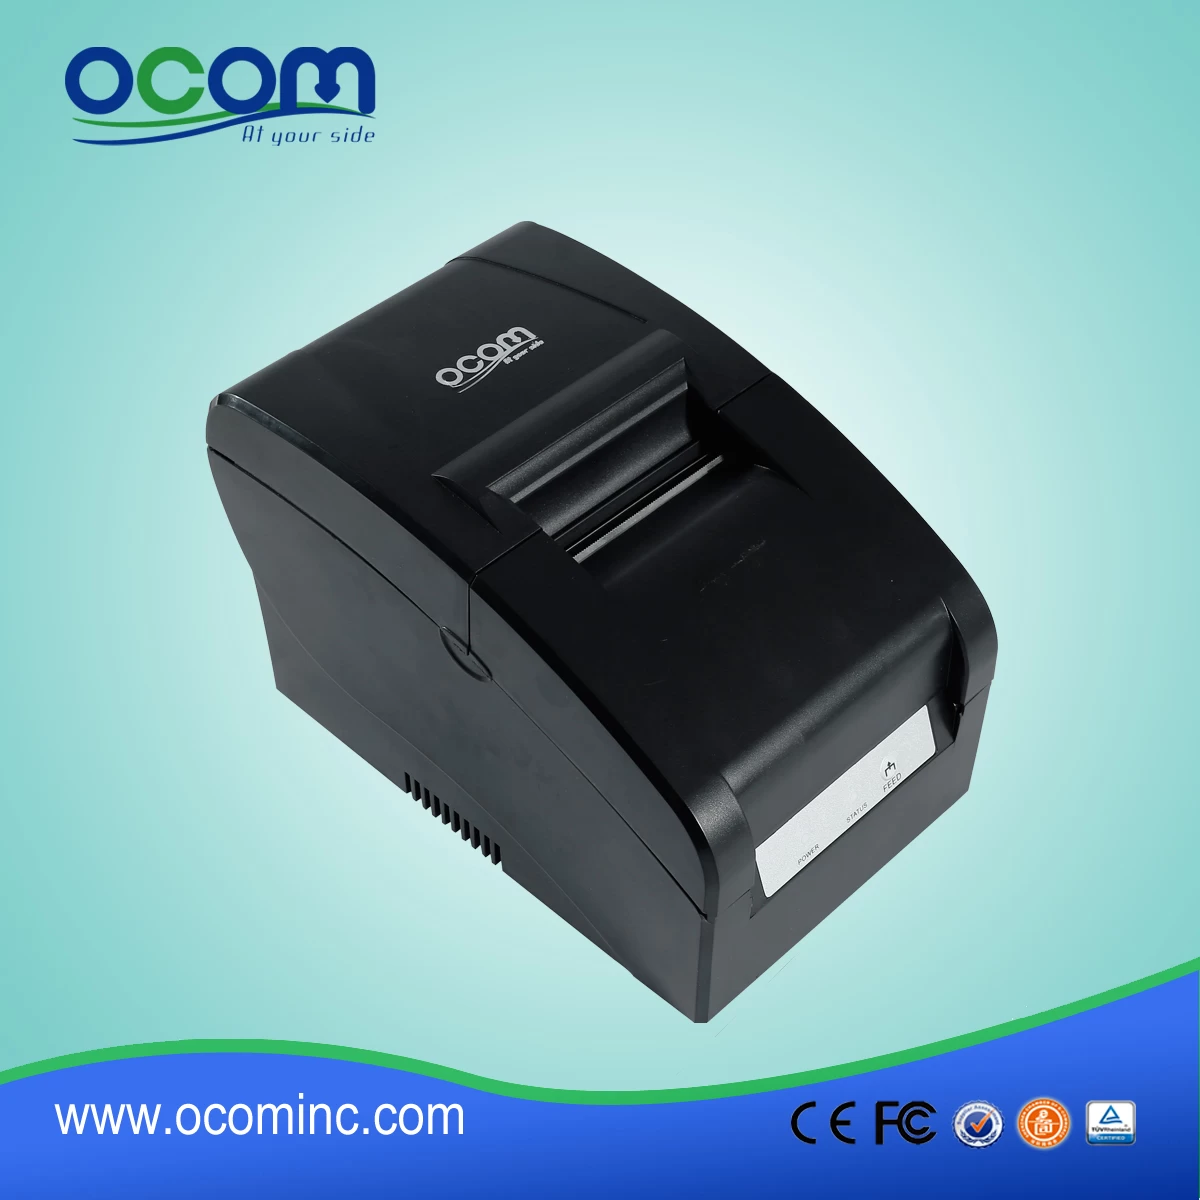 (OCPP-763) 76mm Impact Dot Matrix Recepit Printer With Auto-cutter